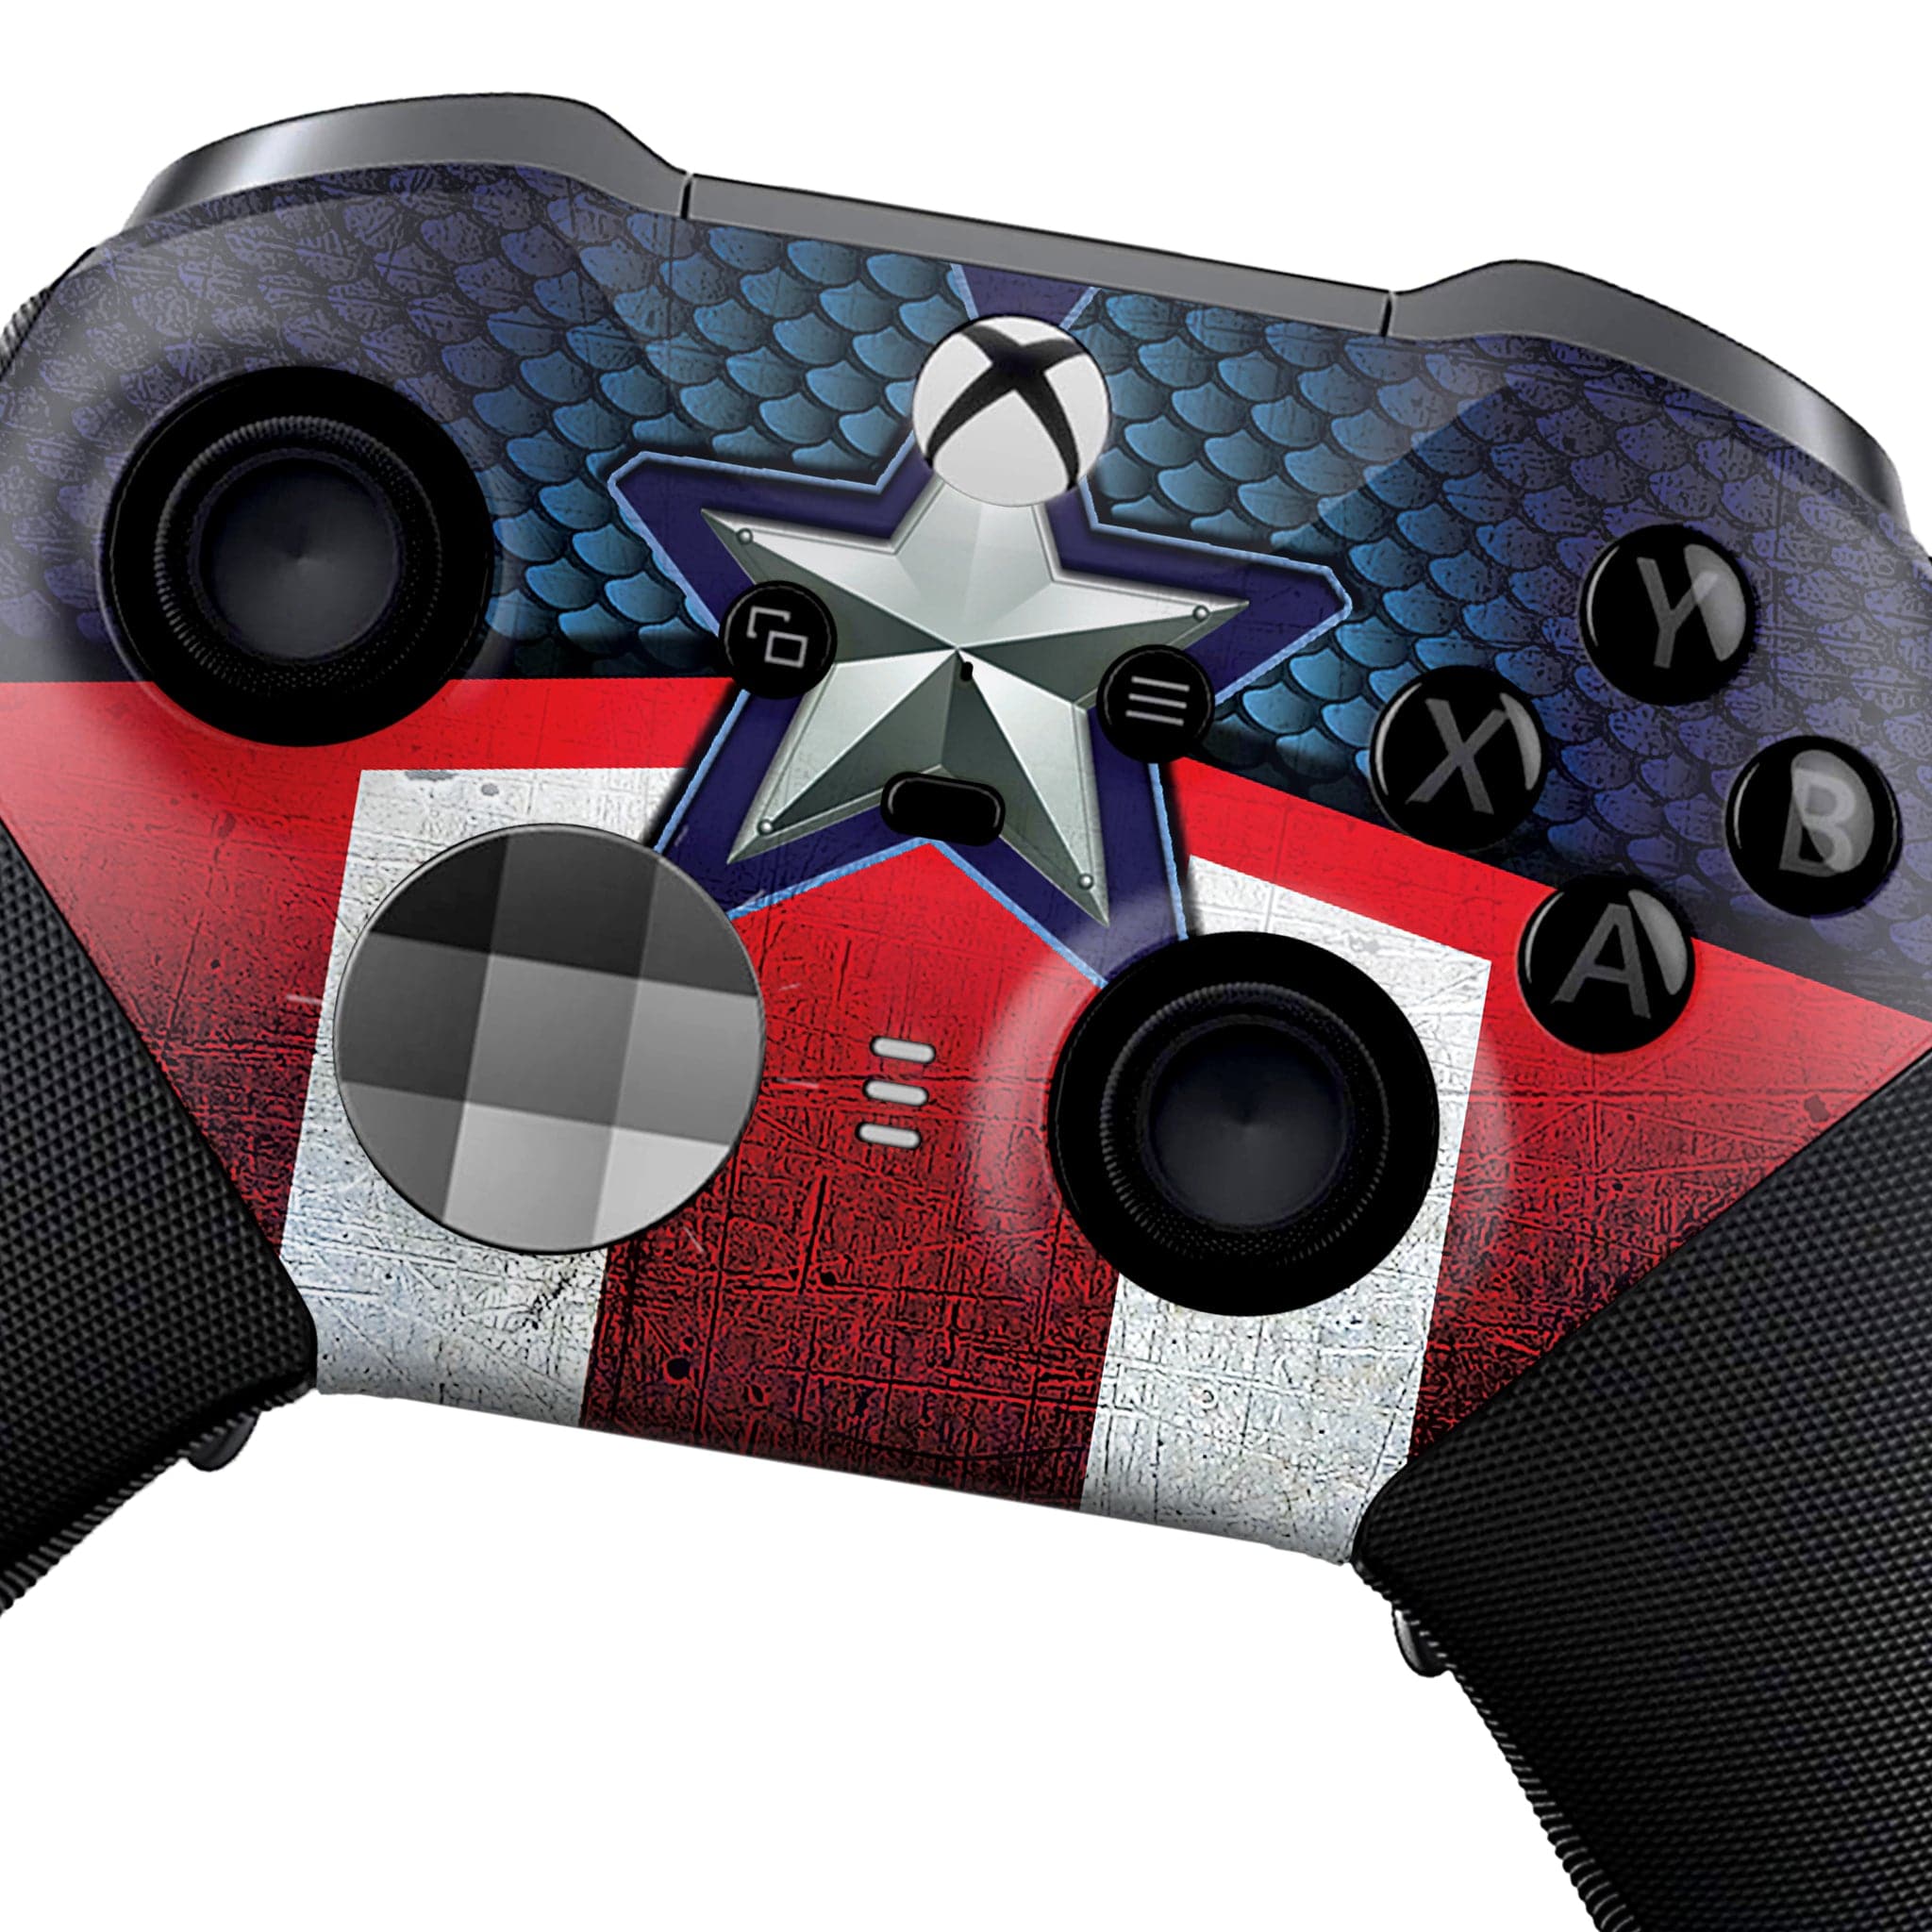 Captain America Xbox Elite Series 2 Controller - Dream Controller